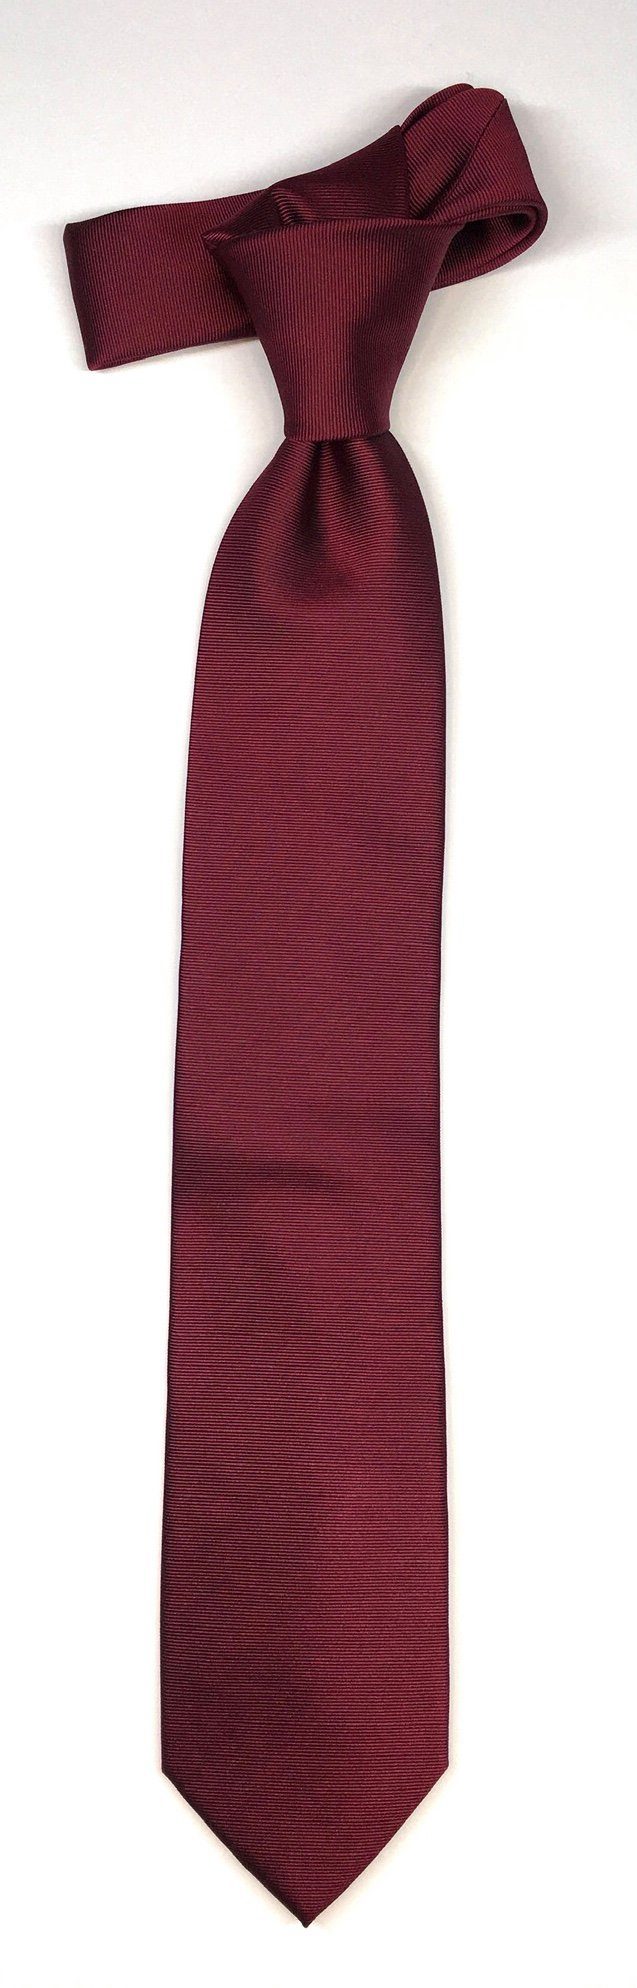 Krawatte Wine Uni Krawatte Seidenfalter Seidenfalter 6cm